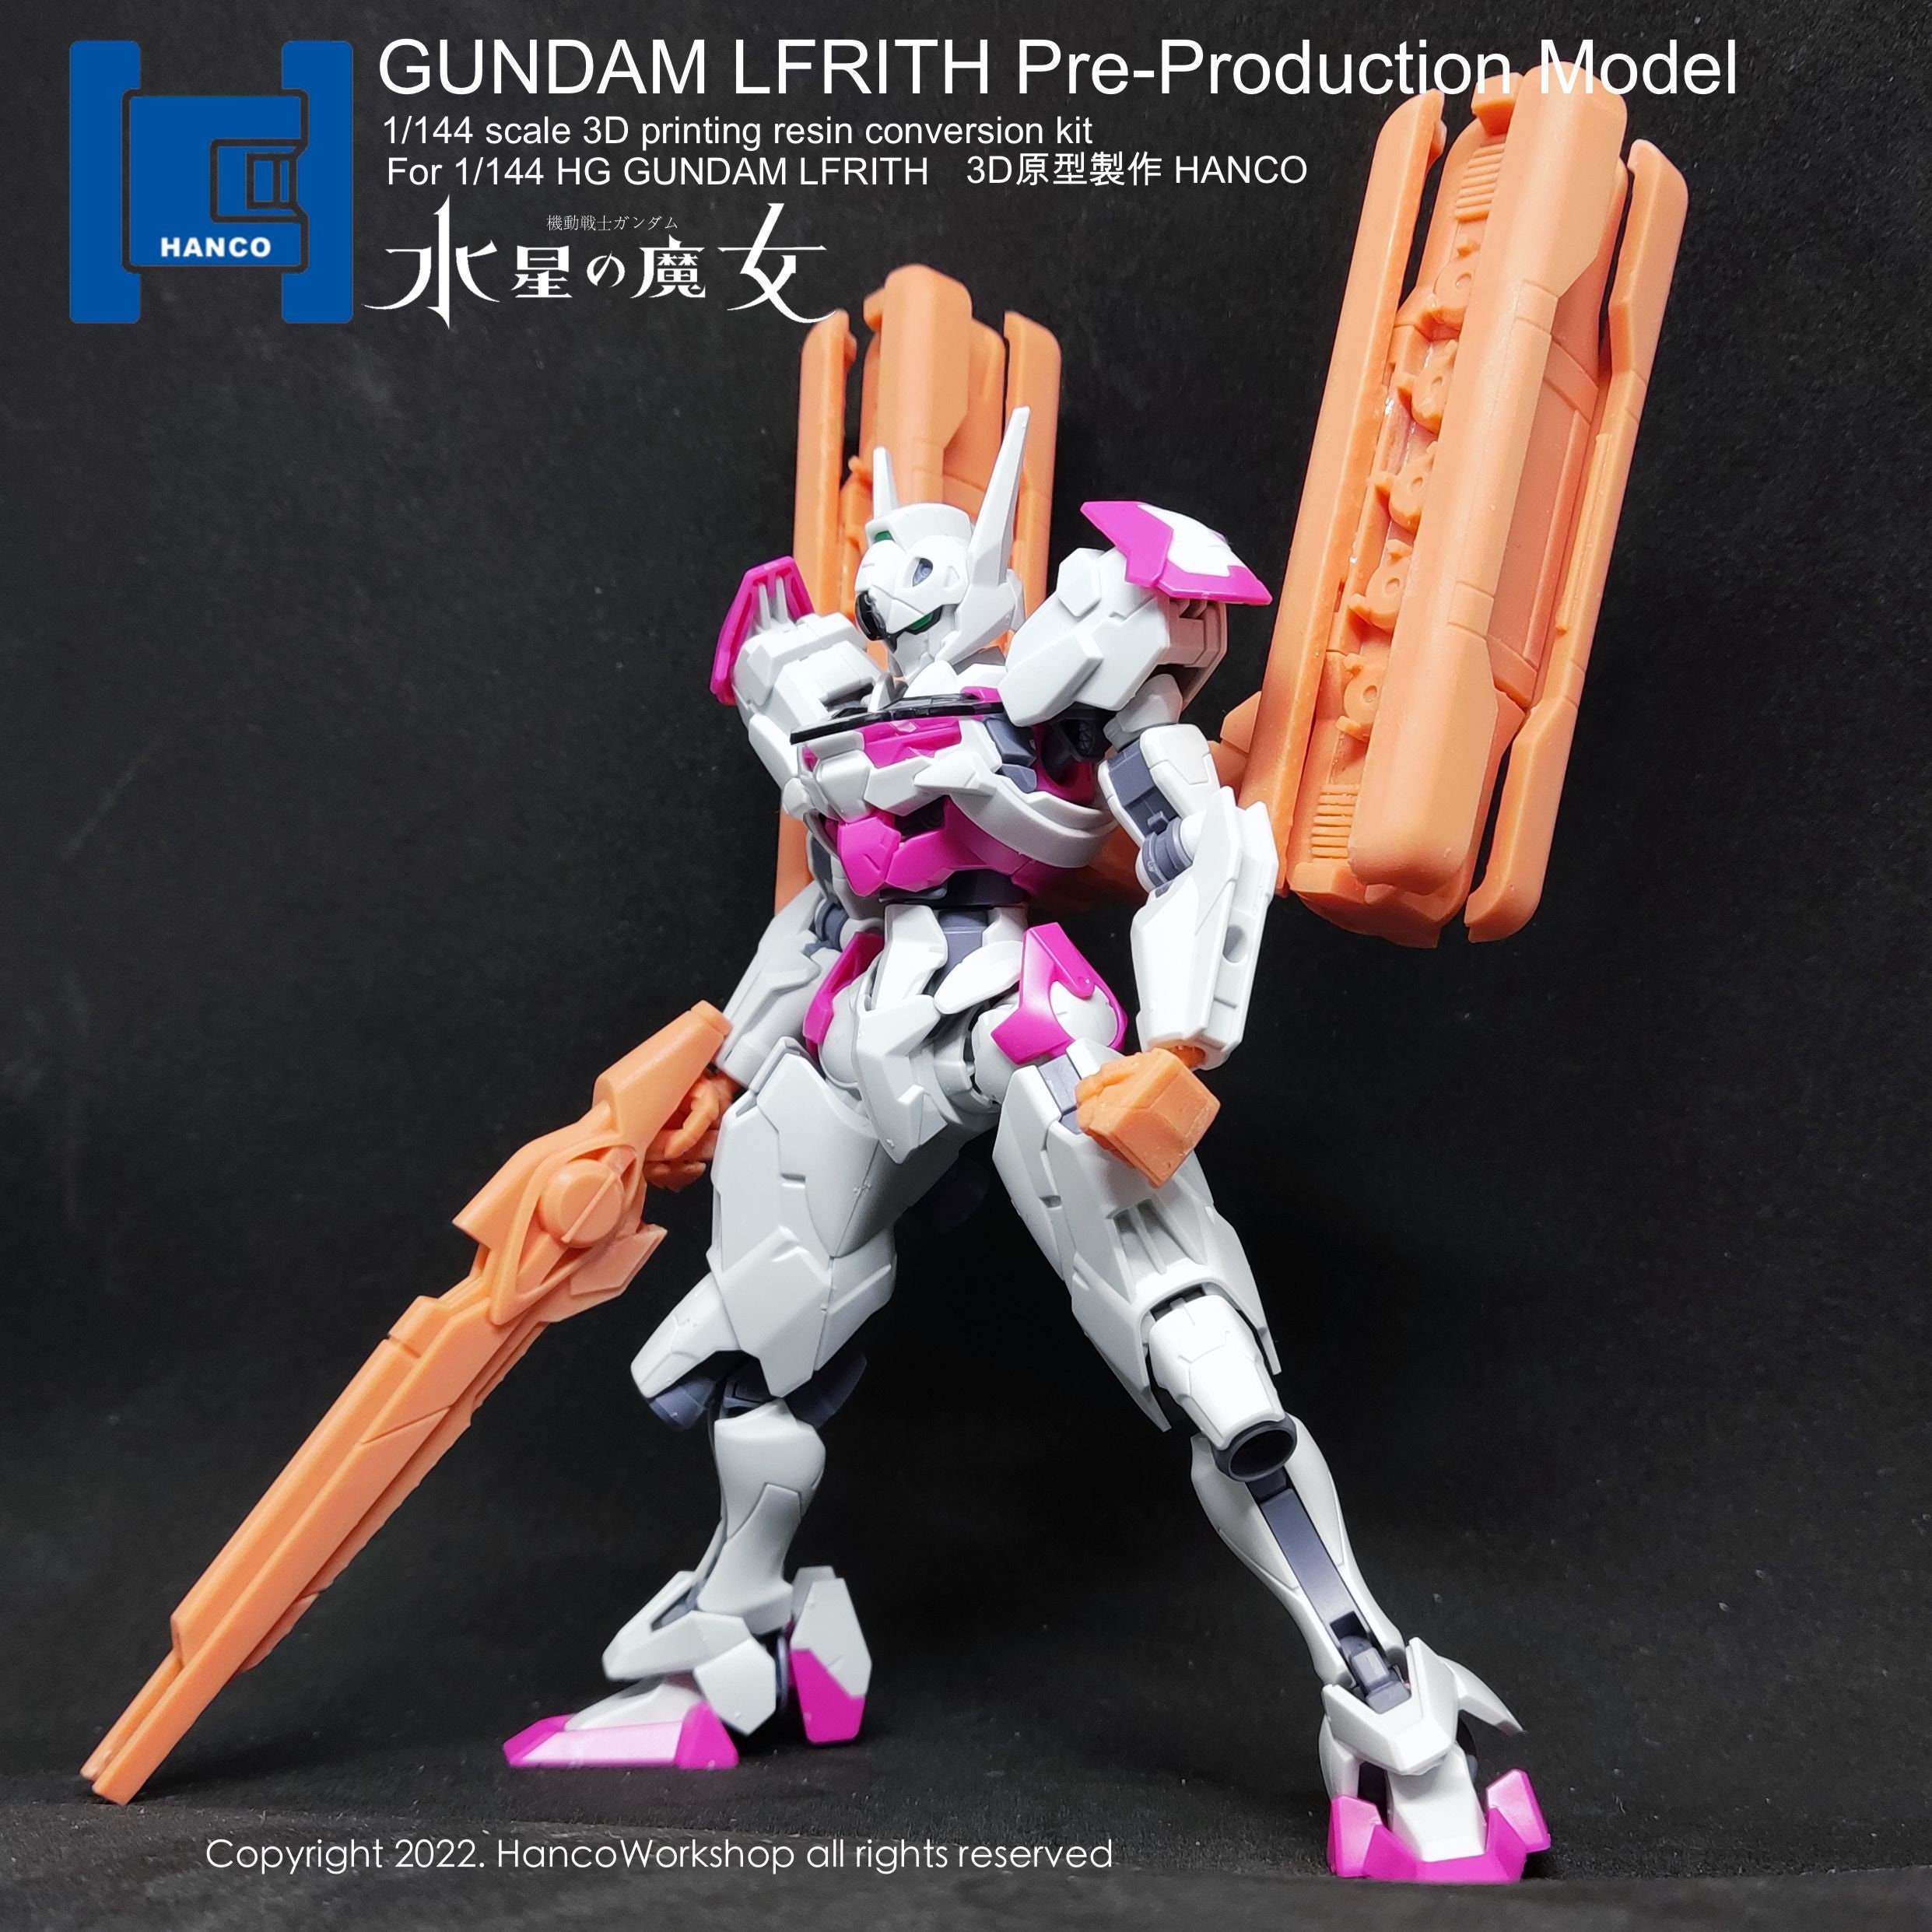 Pixiss Gundam Model Tool Kit: Essential Hobby Tools for Plastic